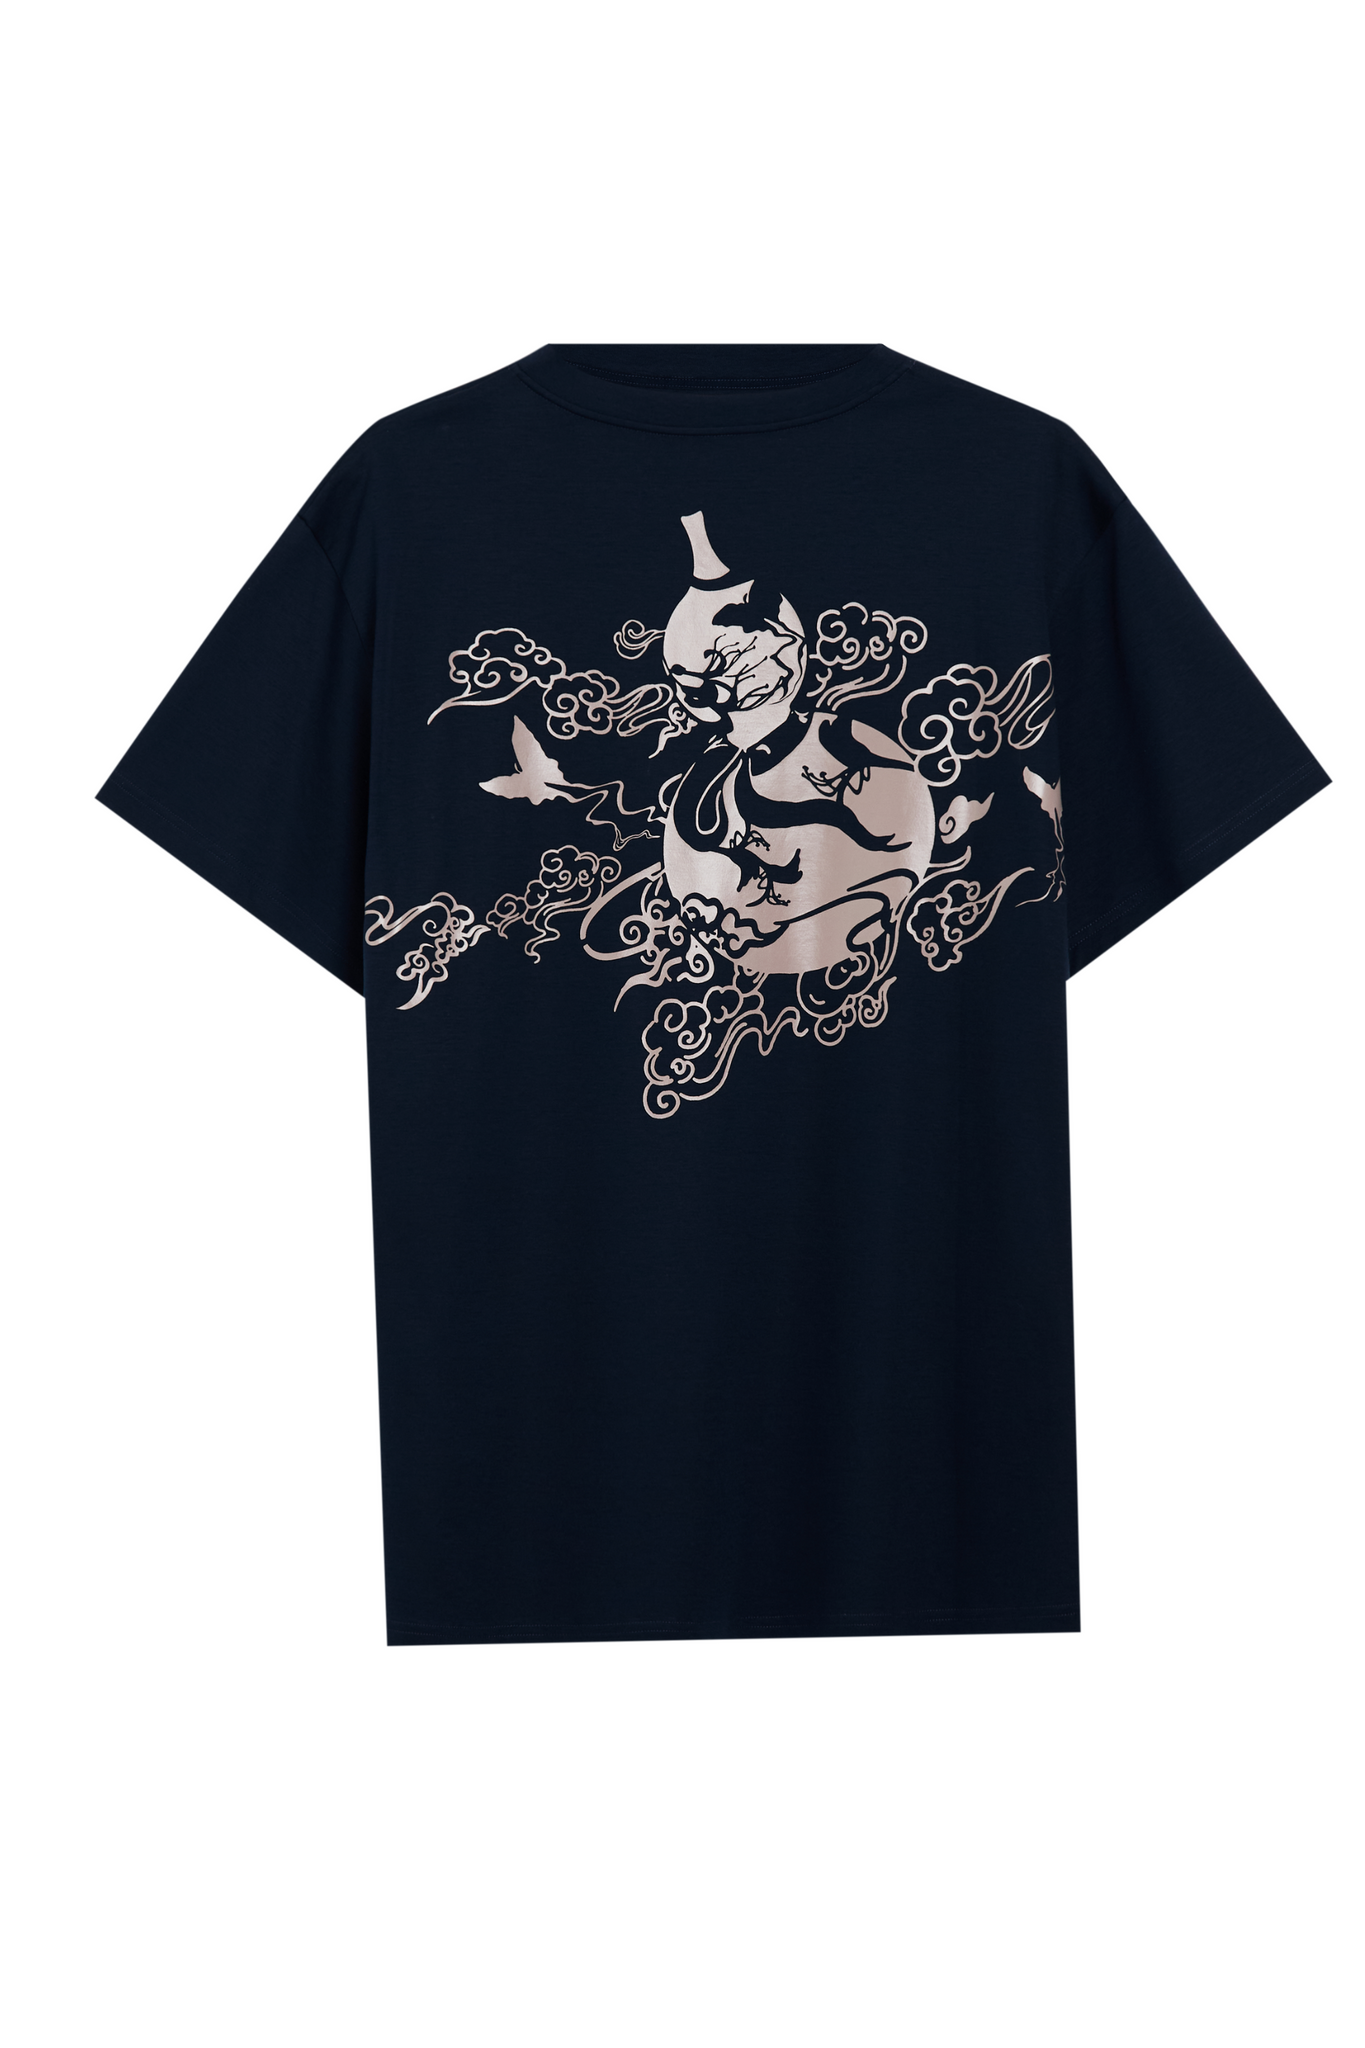 Graphic Mystical T-Shirt